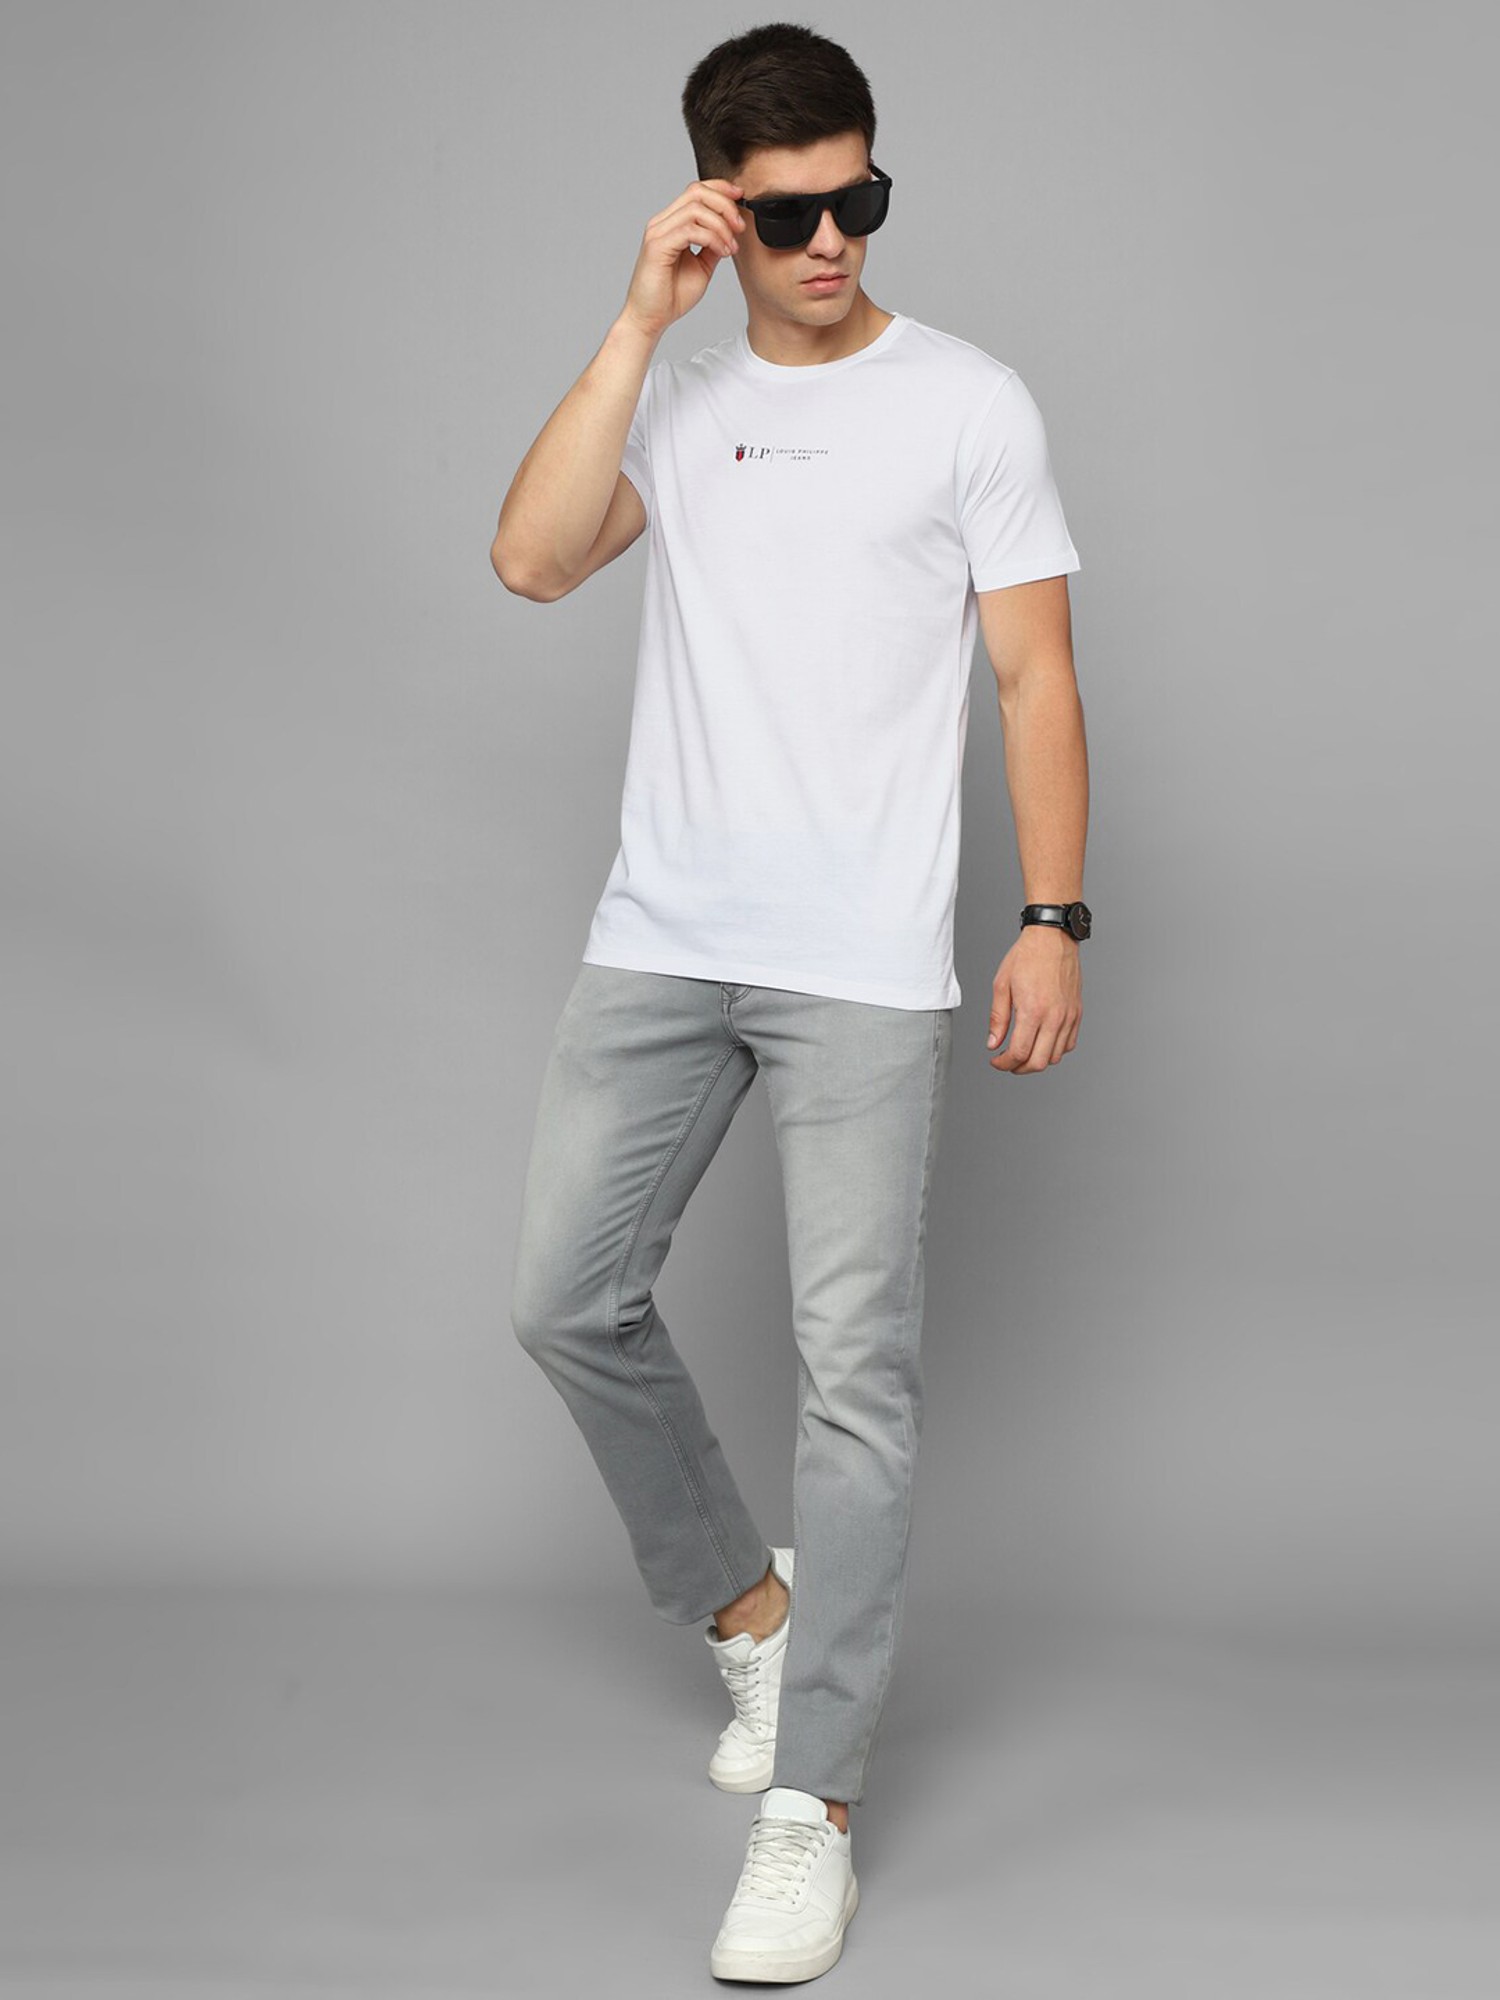 Buy Peter England Jeans White Slim Fit TShirt for Mens Online  Tata CLiQ